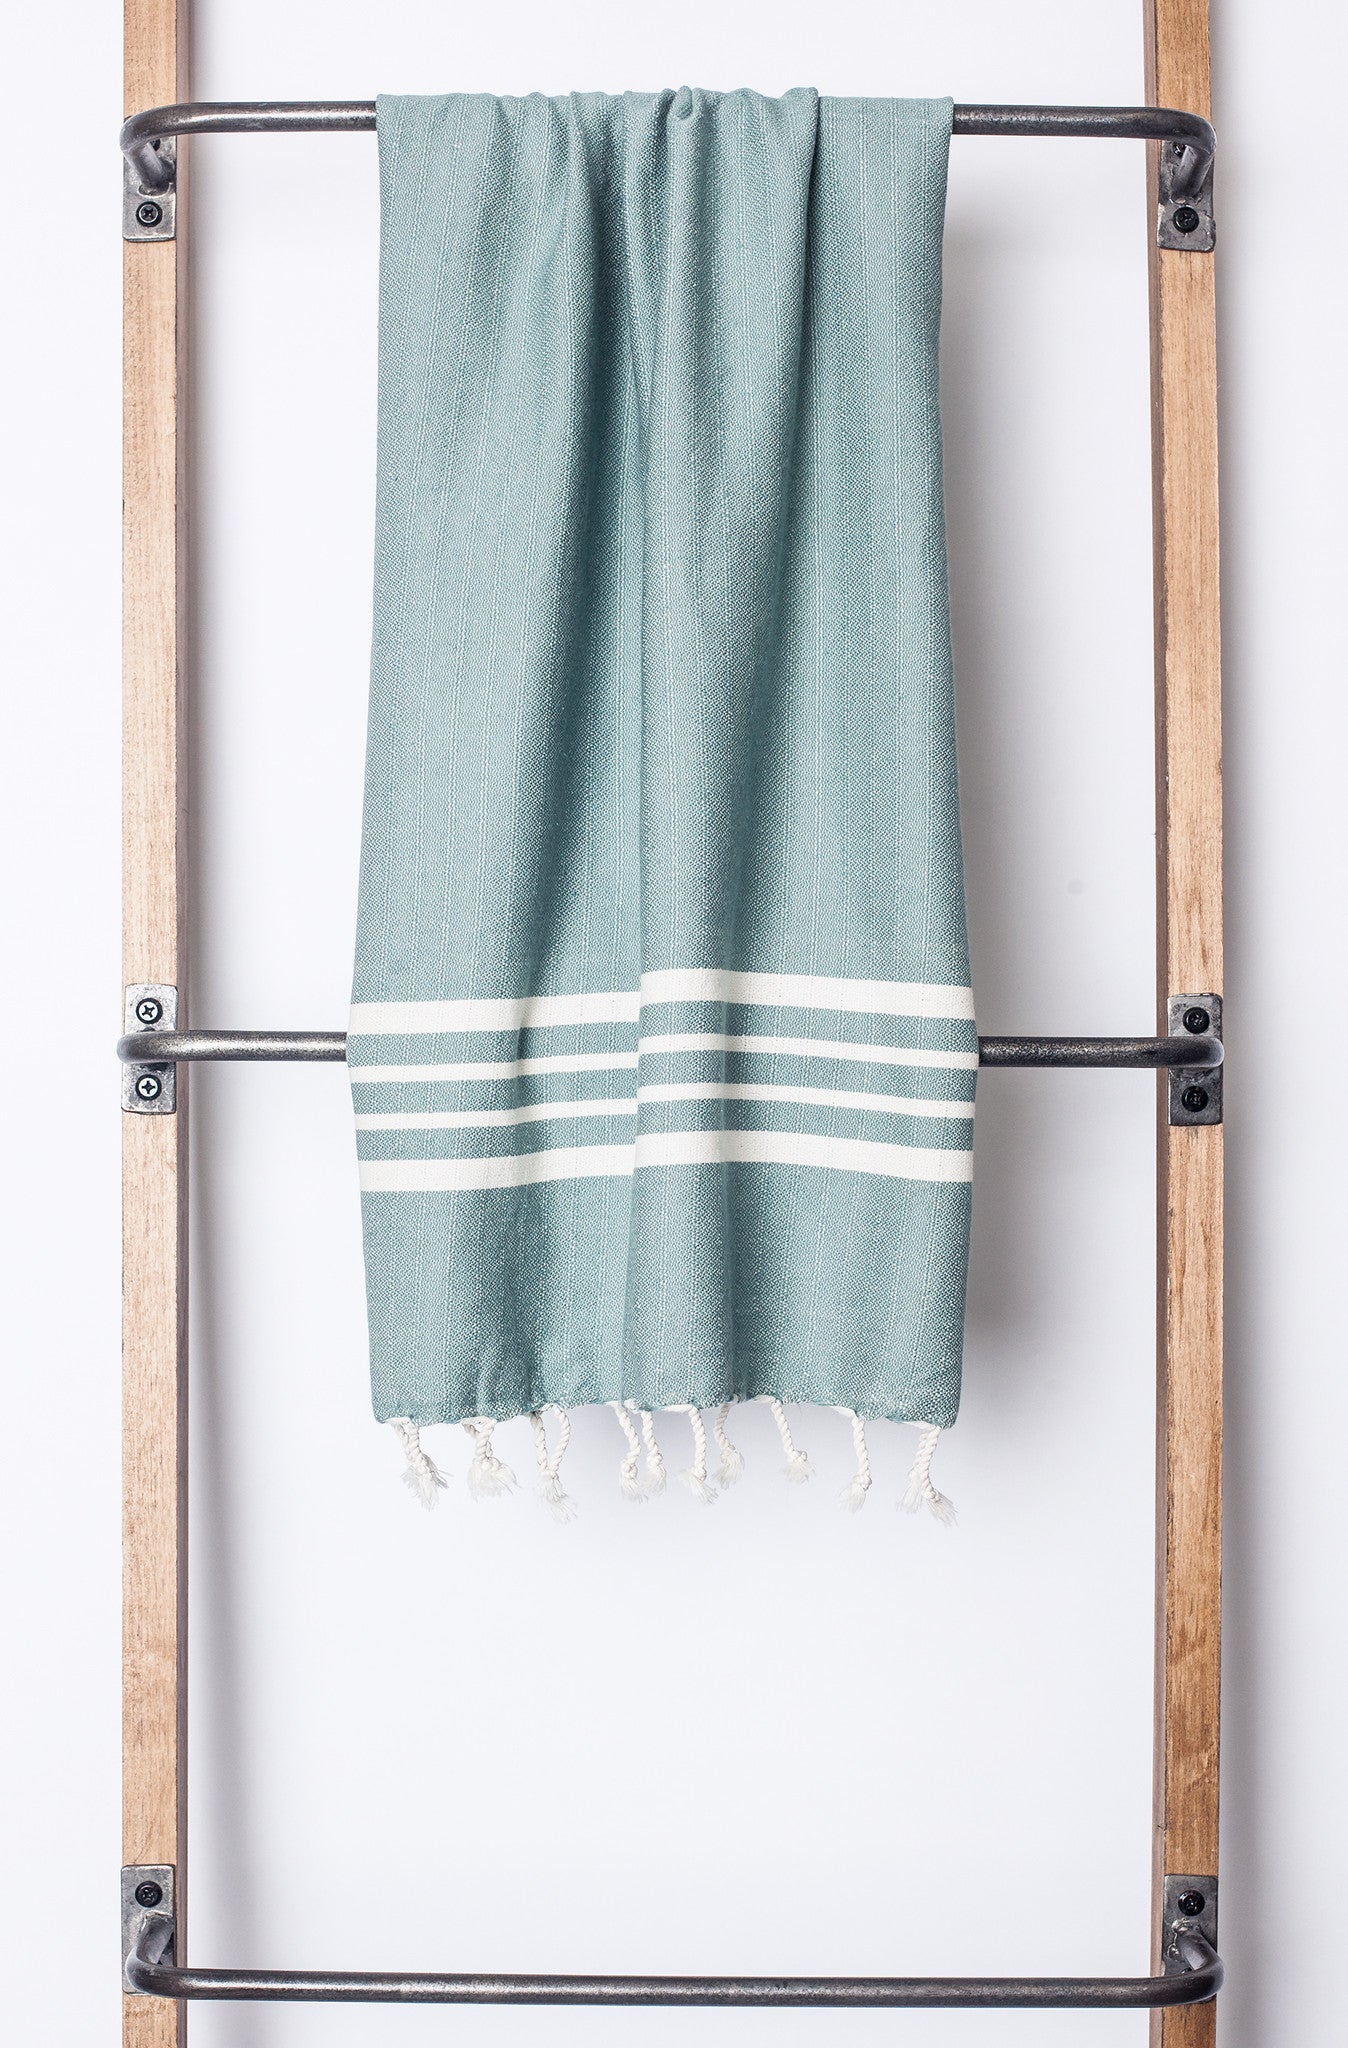 Bath Aegean imports Towel Background - Ecru marmara Turkish Color